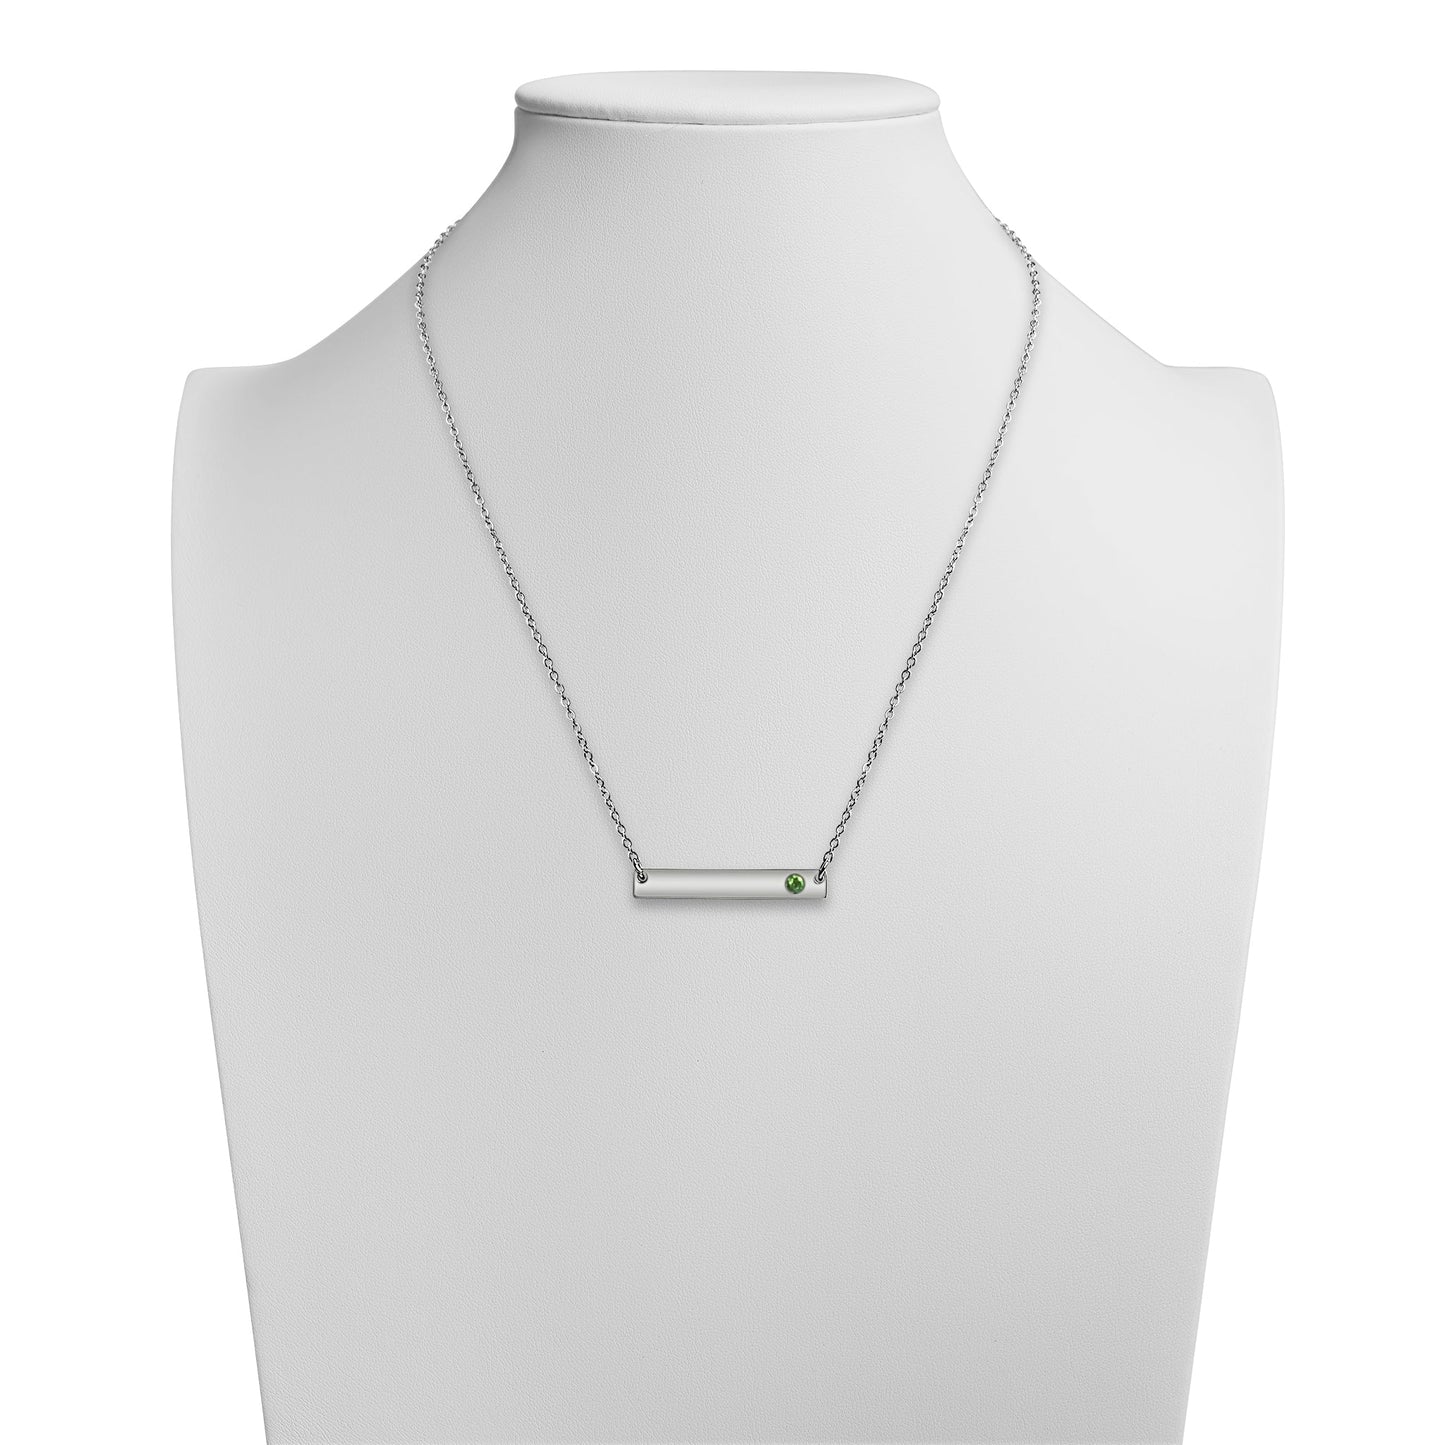 Stainless Steel Bar Birthstone Necklace / SBB0055